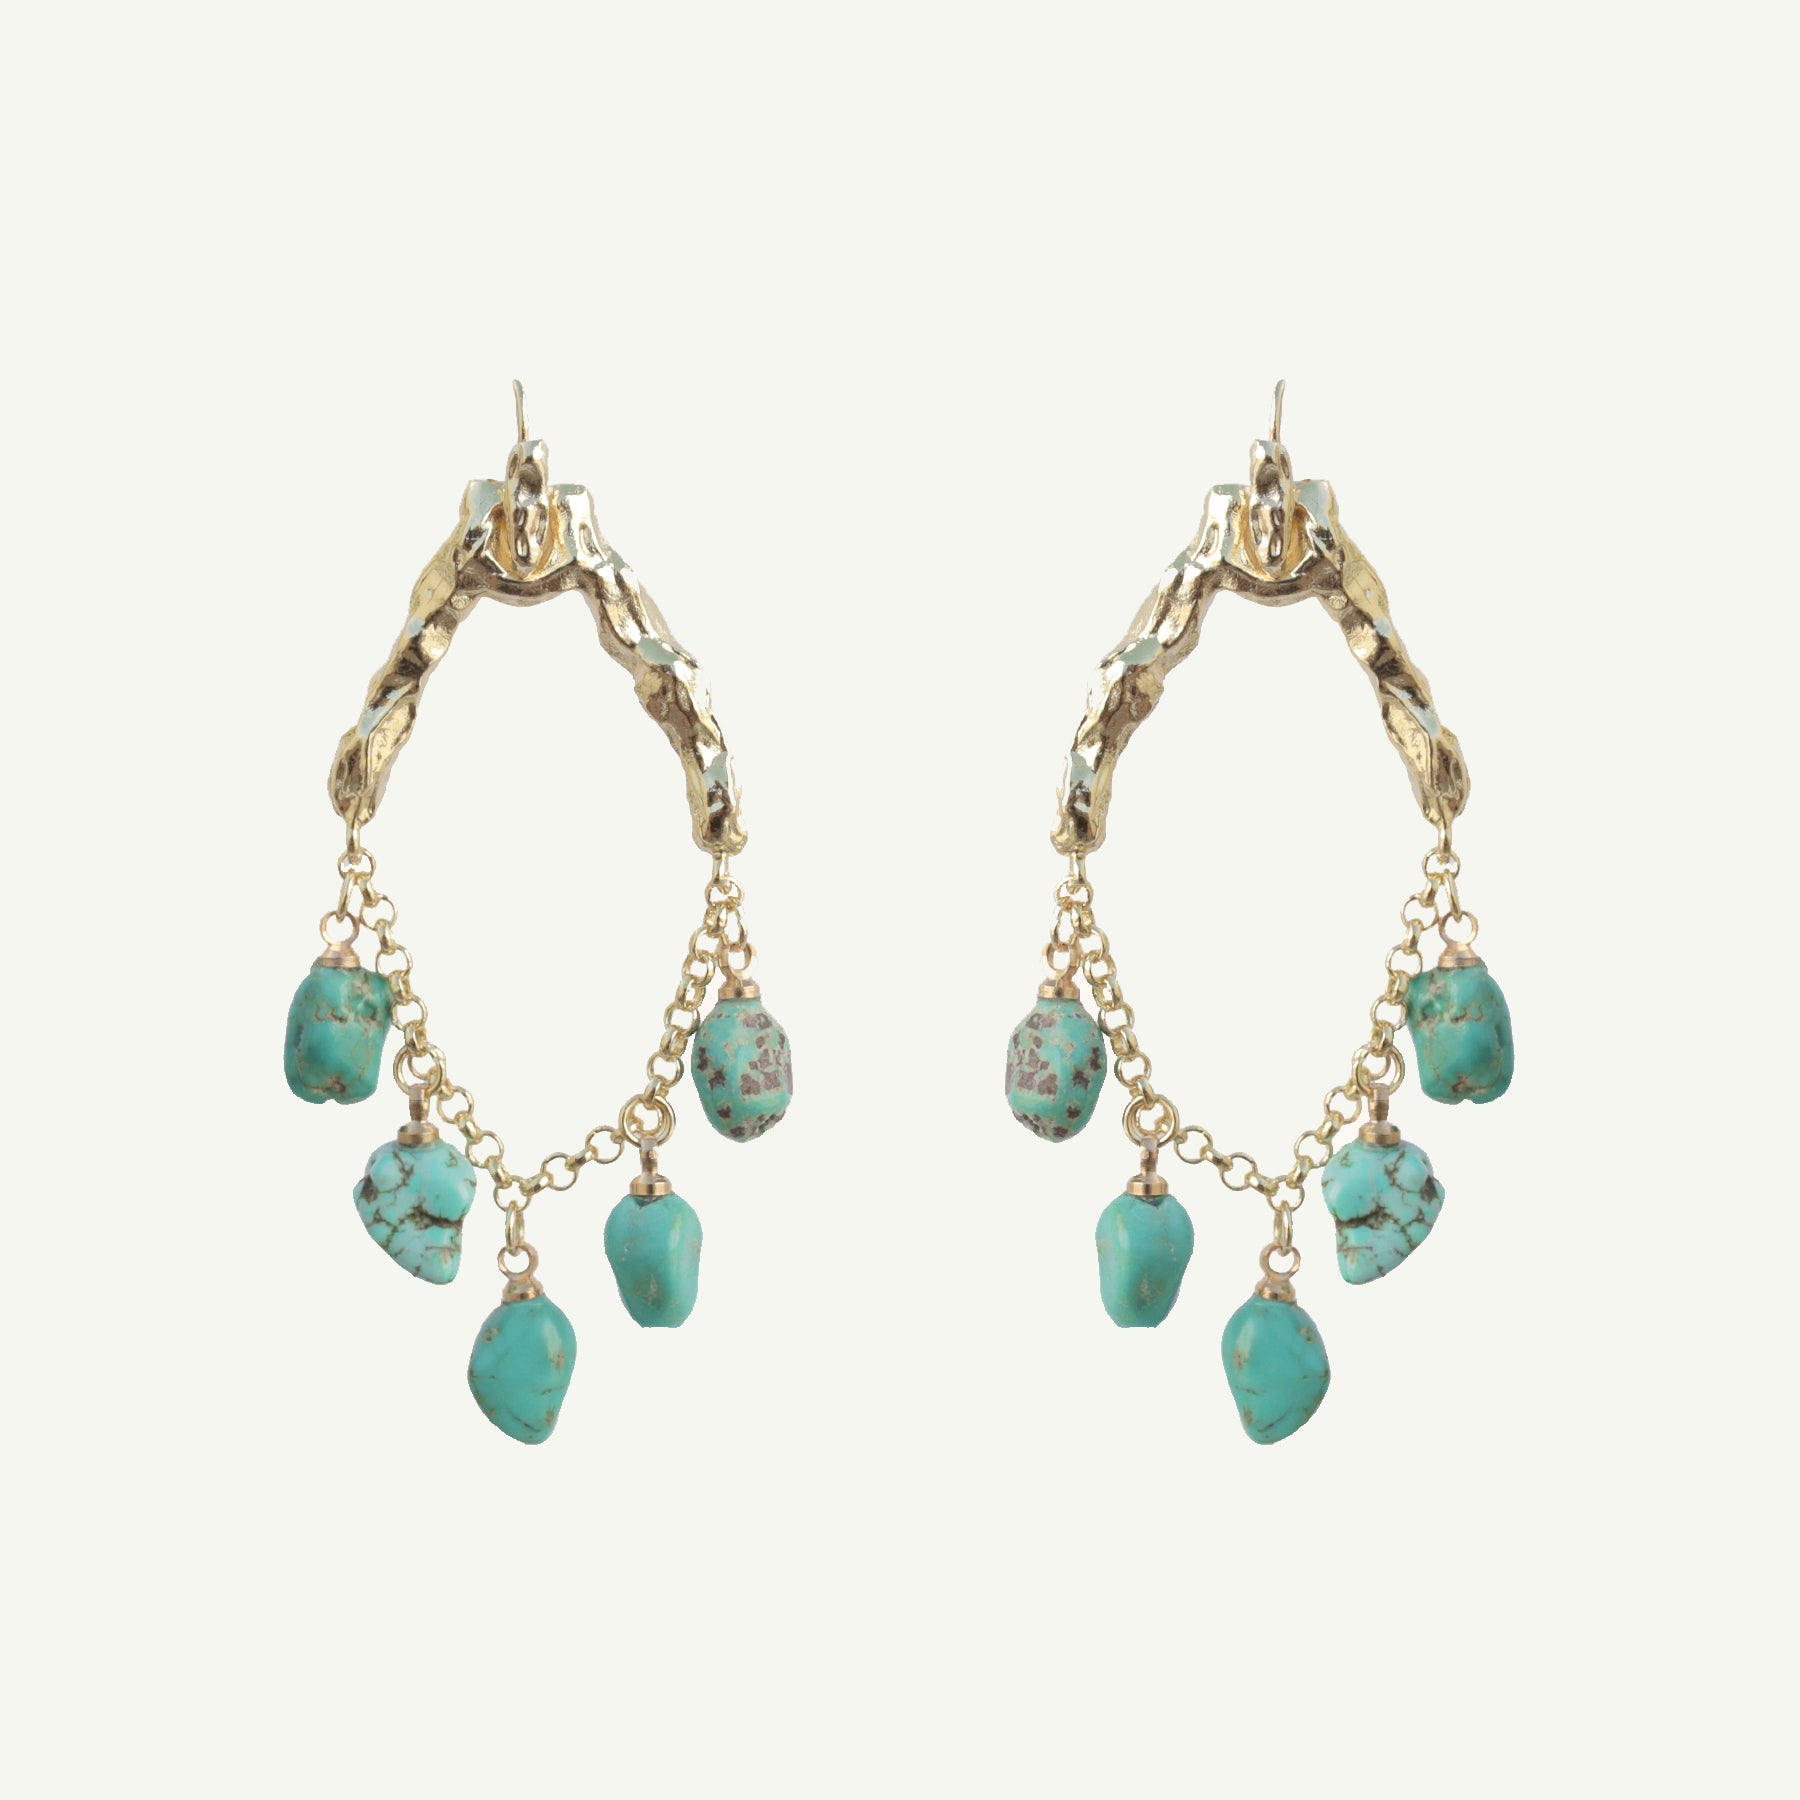 Selene Turquoise Earrings Small